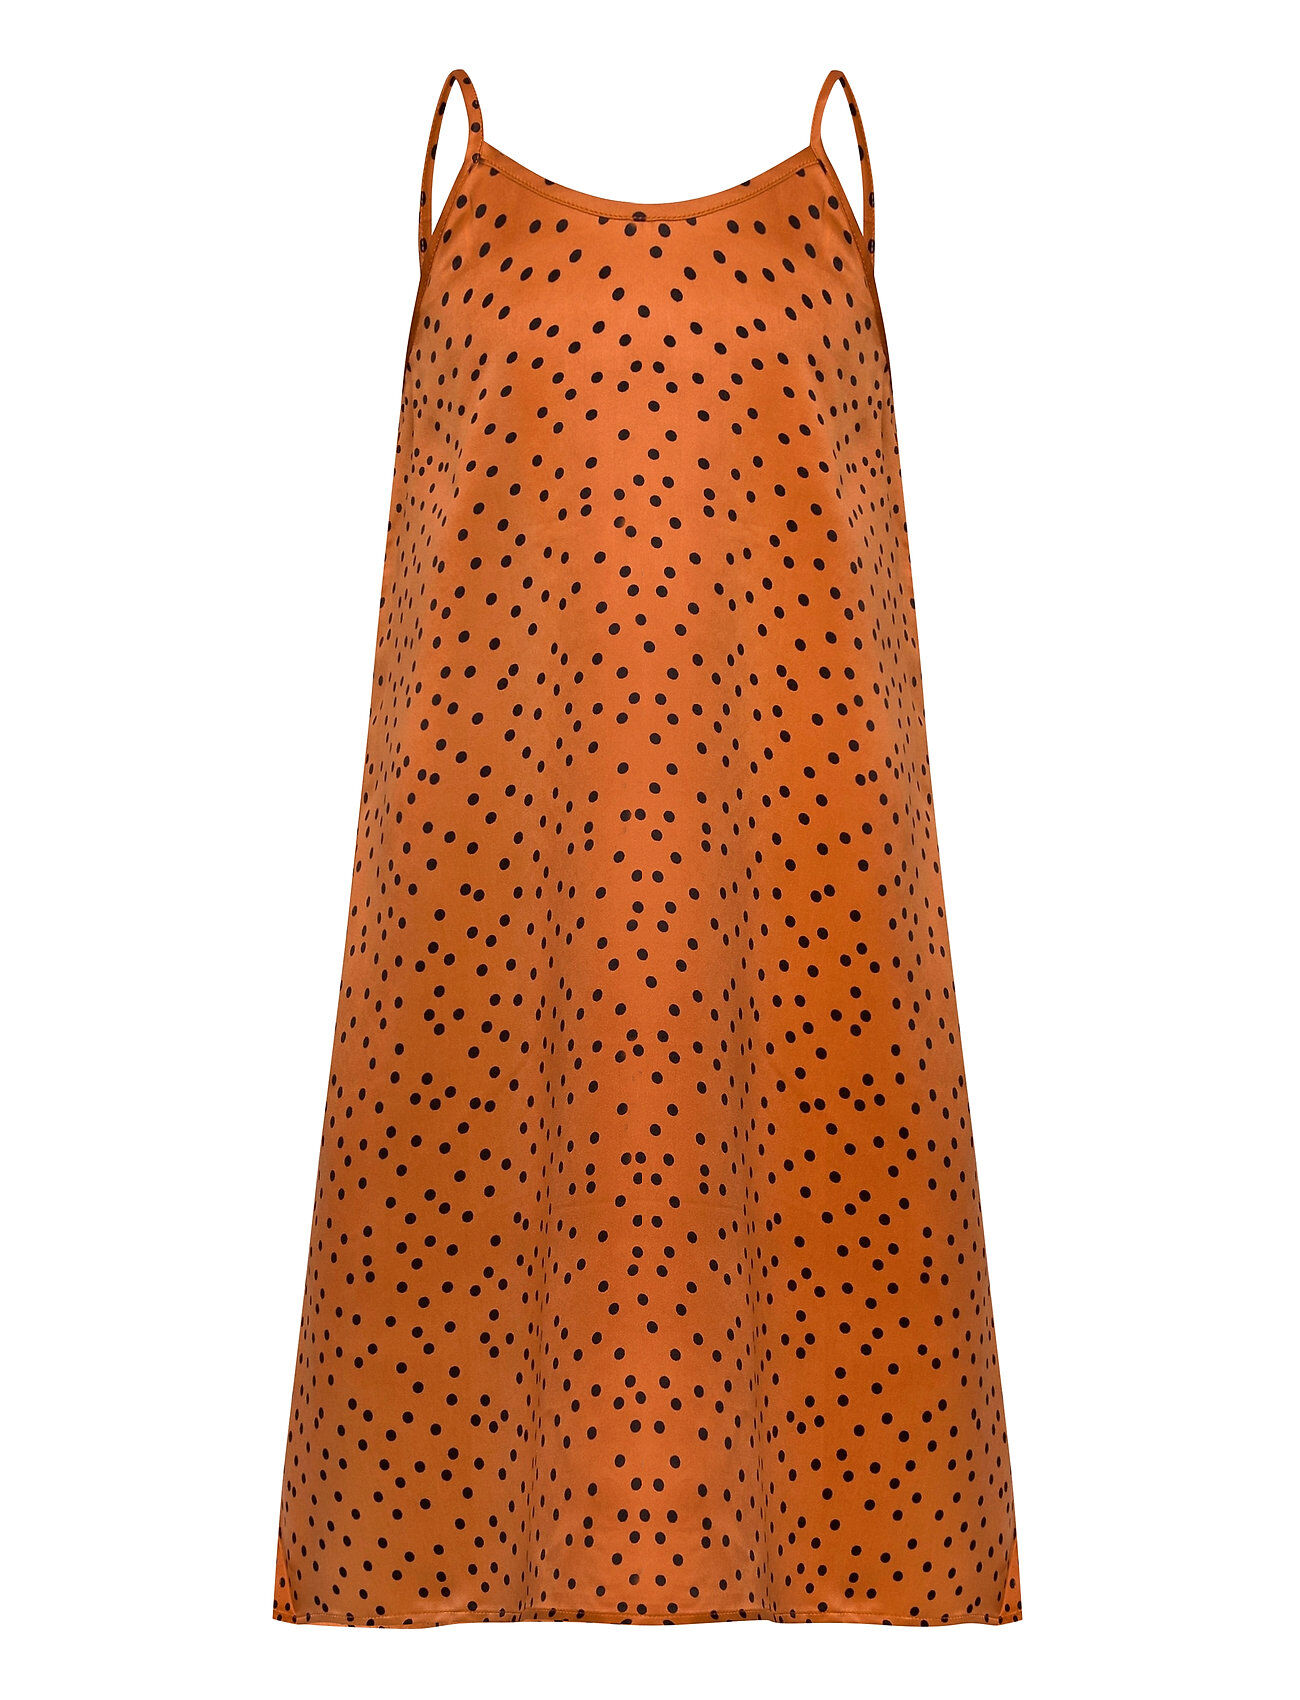 D-xel Katty 981 Dresses & Skirts Dresses Casual Dresses Sleeveless Casual Dresses Oransje D-xel